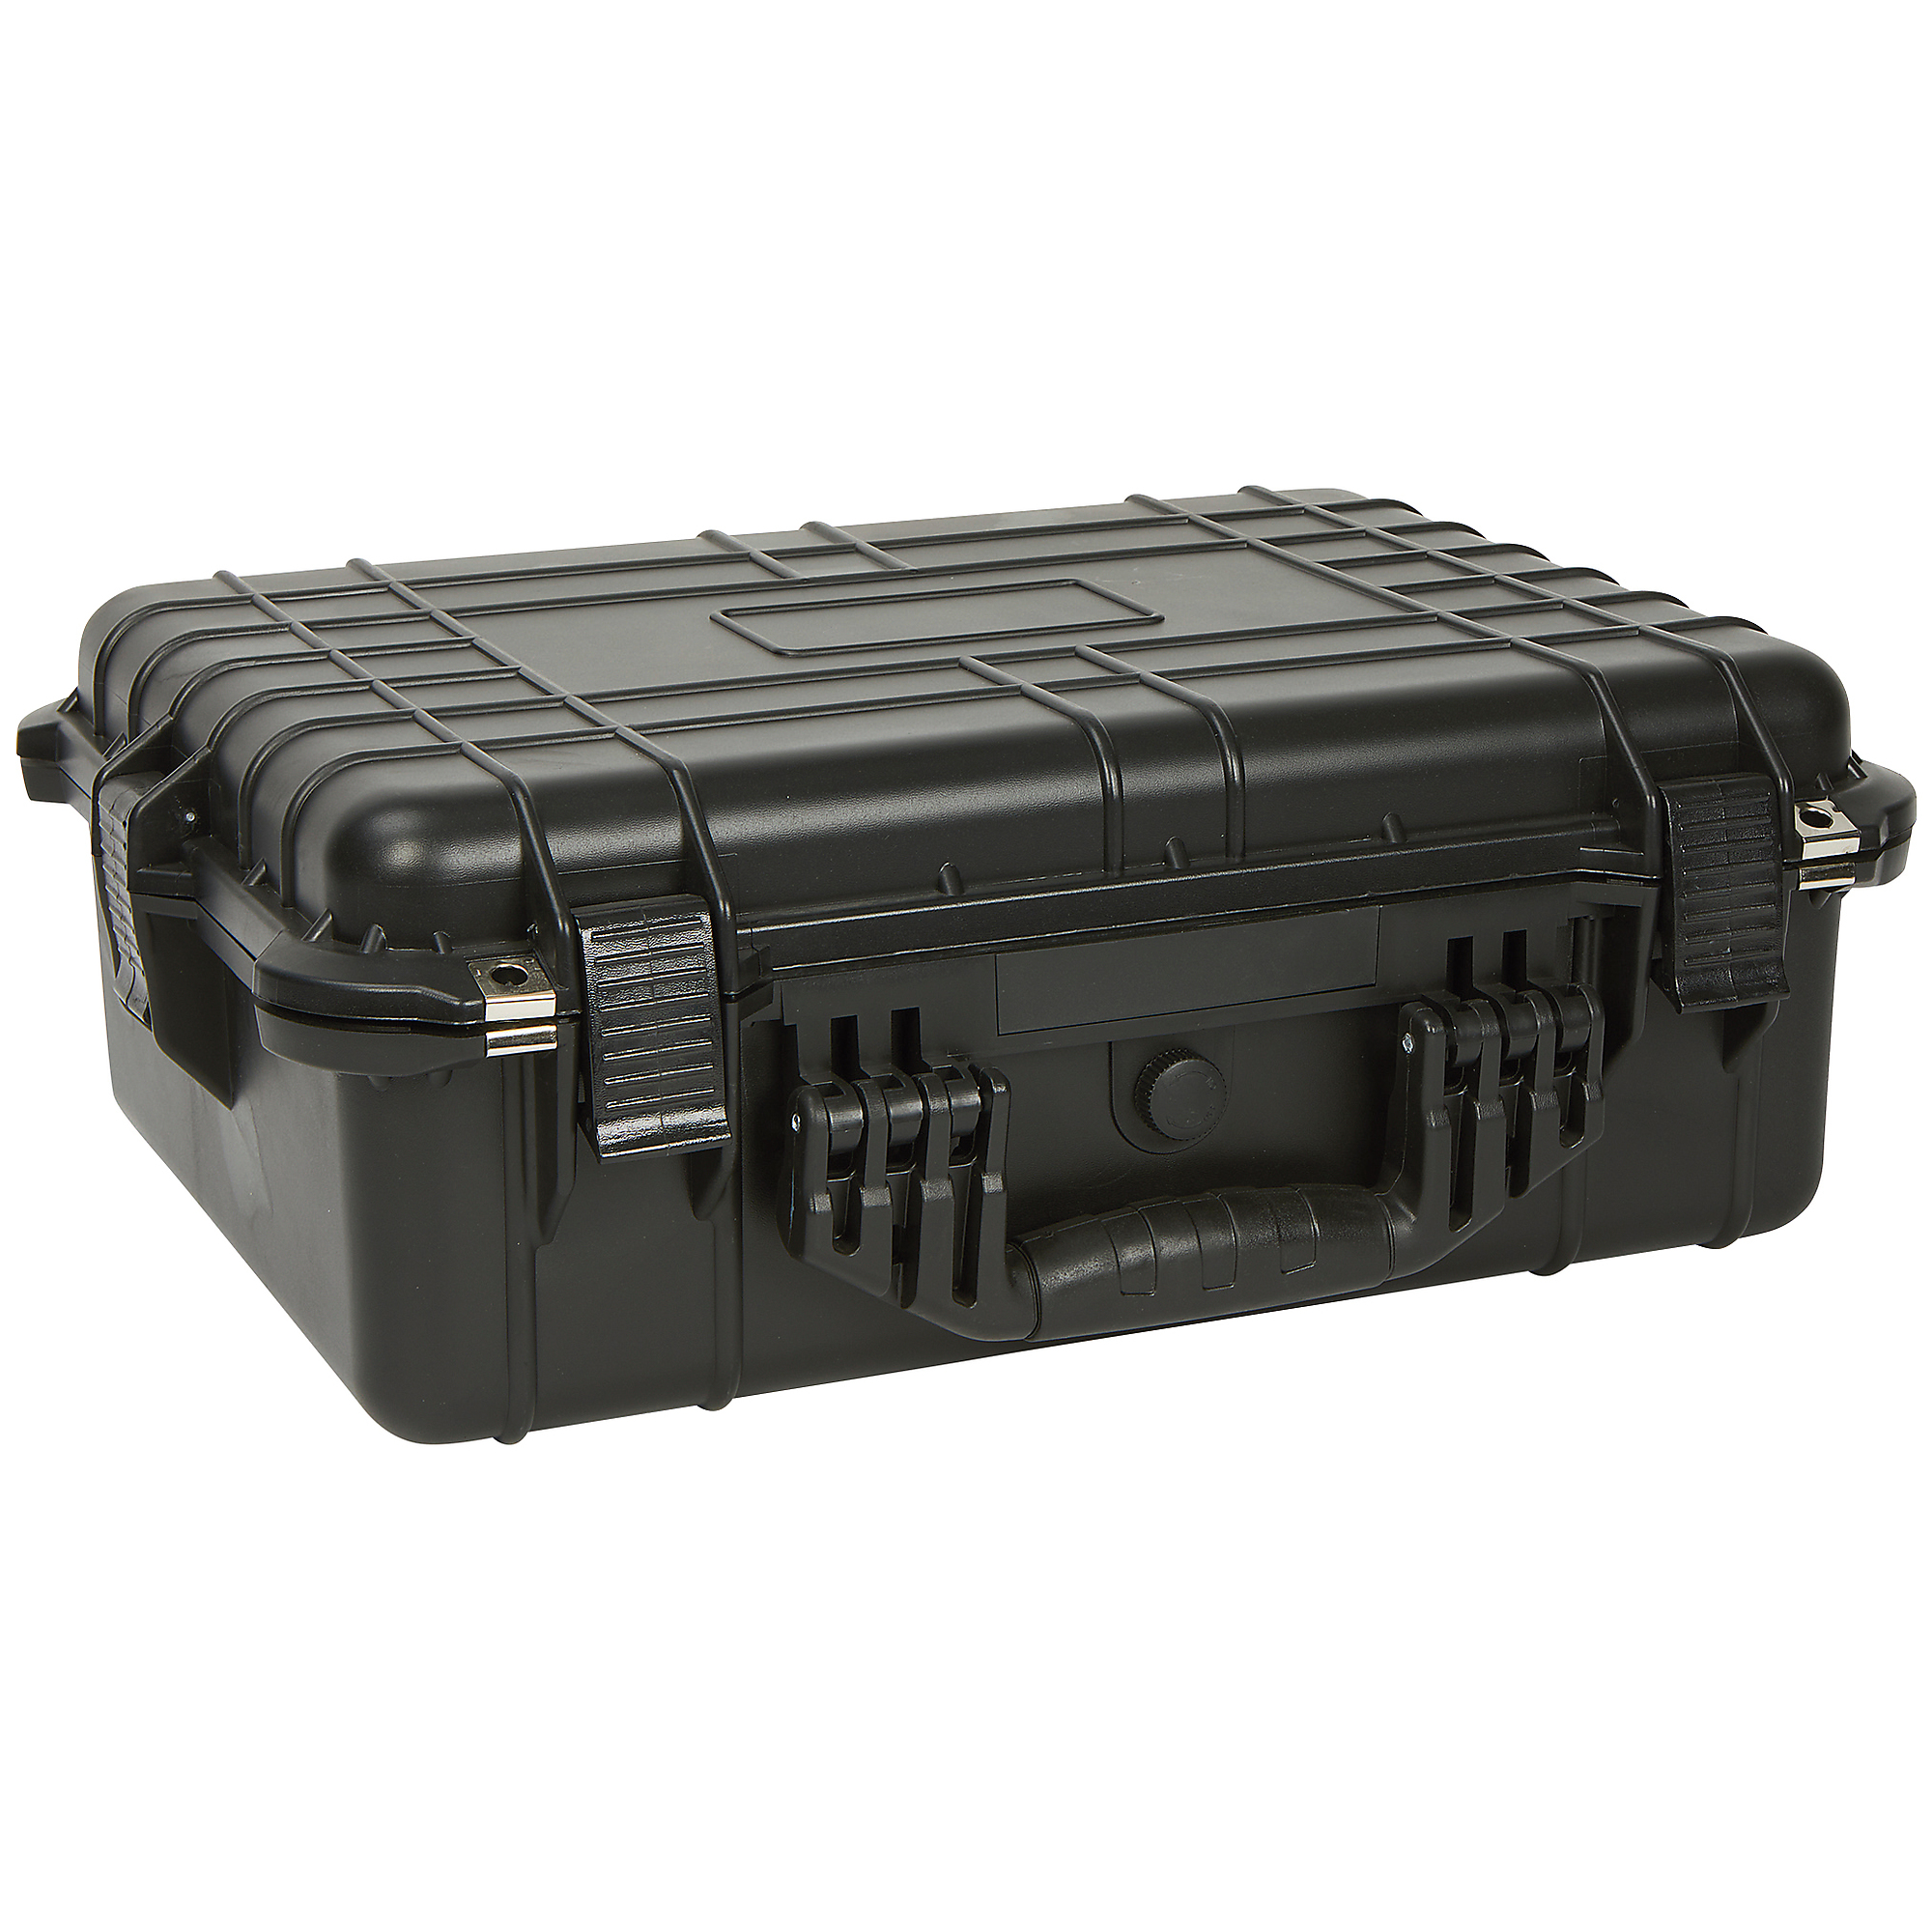  Ironton 11 5/8in. Plastic Ammo Box - 11 5/8in.W x 5 1